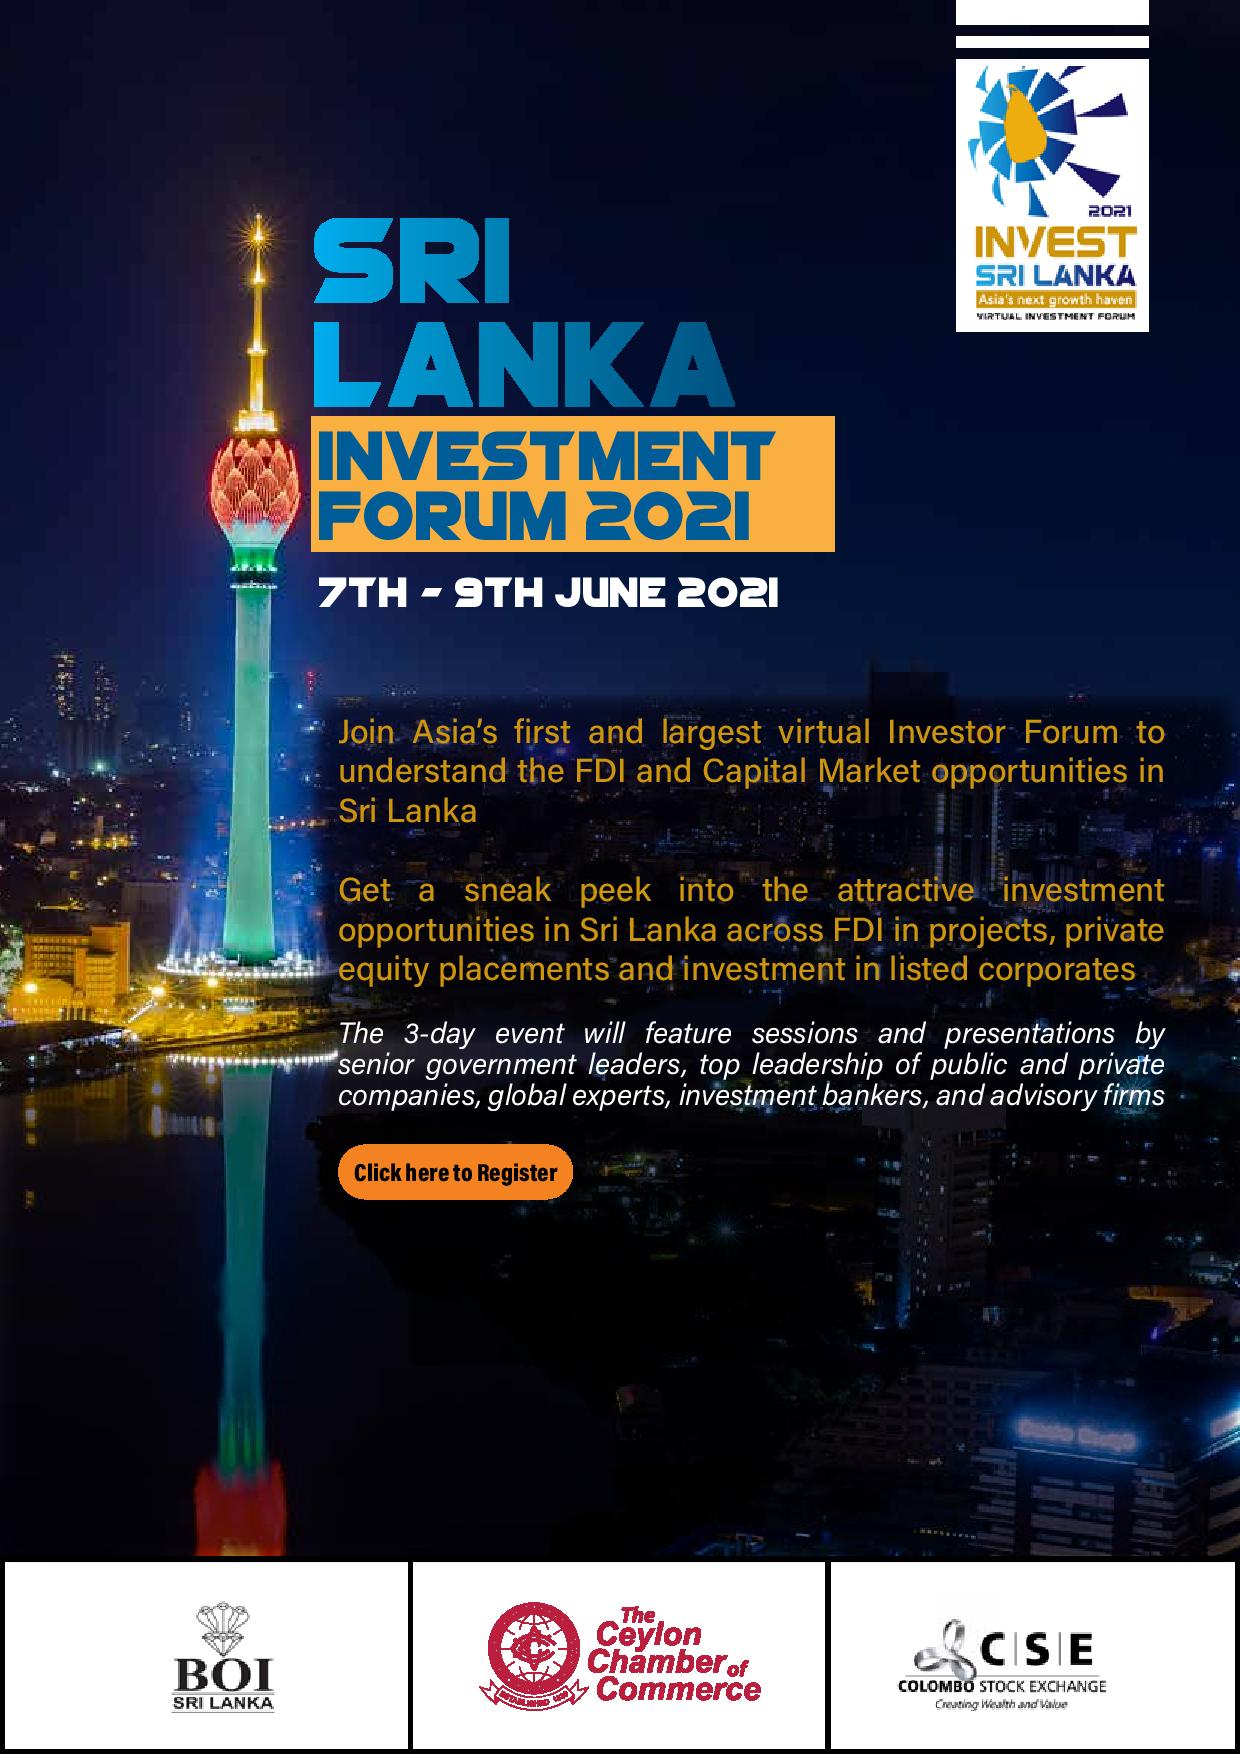 Sri Lanka investment forum 2021 7th to 9th June 2021